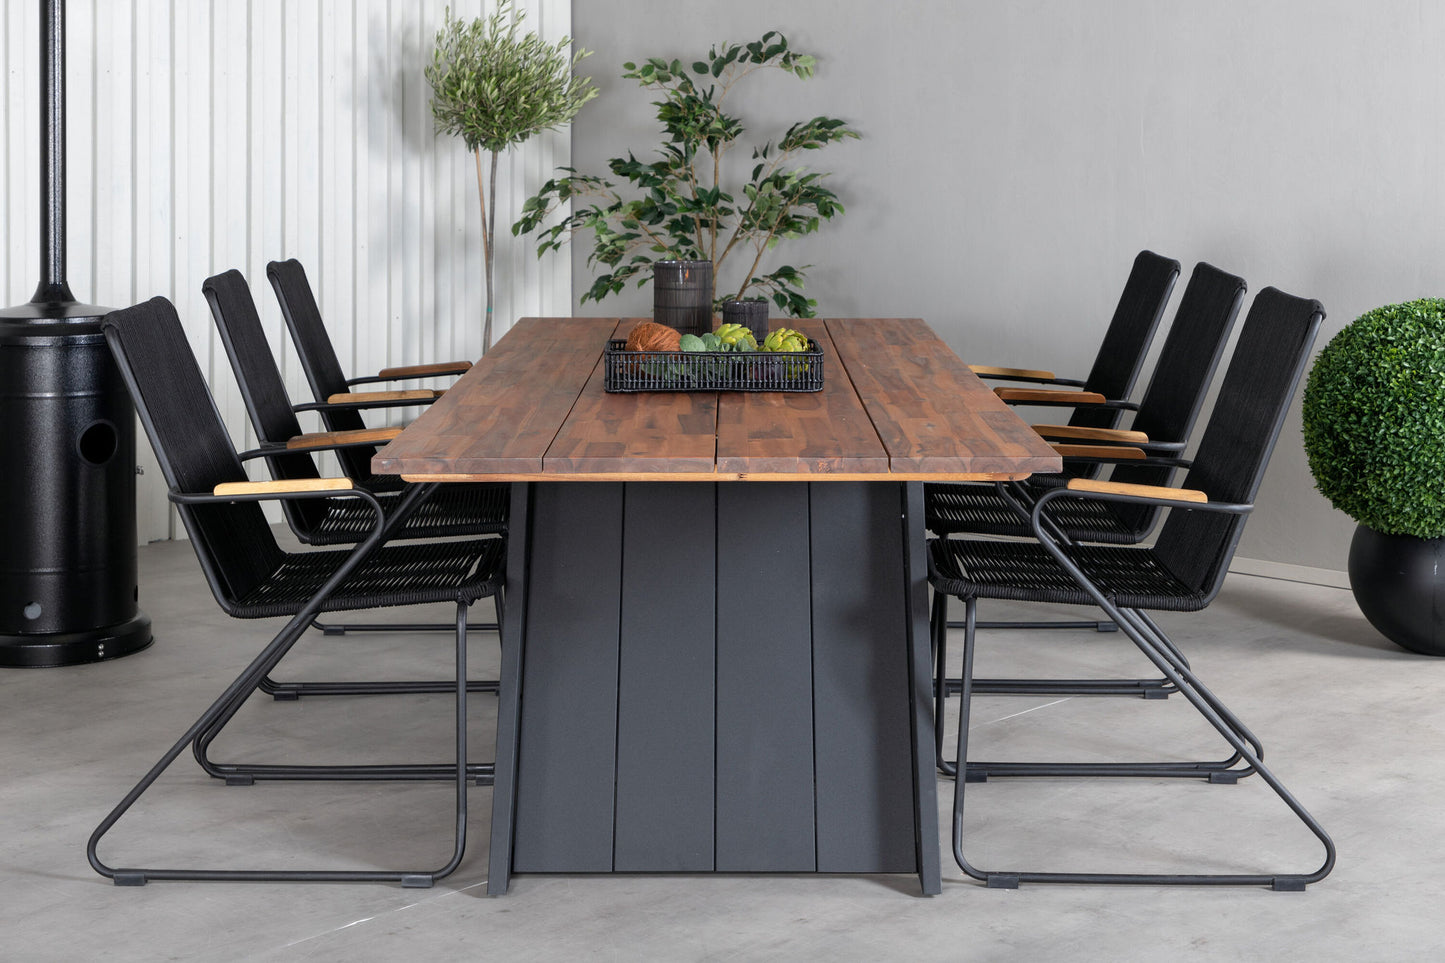 Doory - Spisebord, sort stål / akacie top i teak look - 250*100cm+Bois Stol m. armlæn - Sort Alu / Sort Reb / akacia